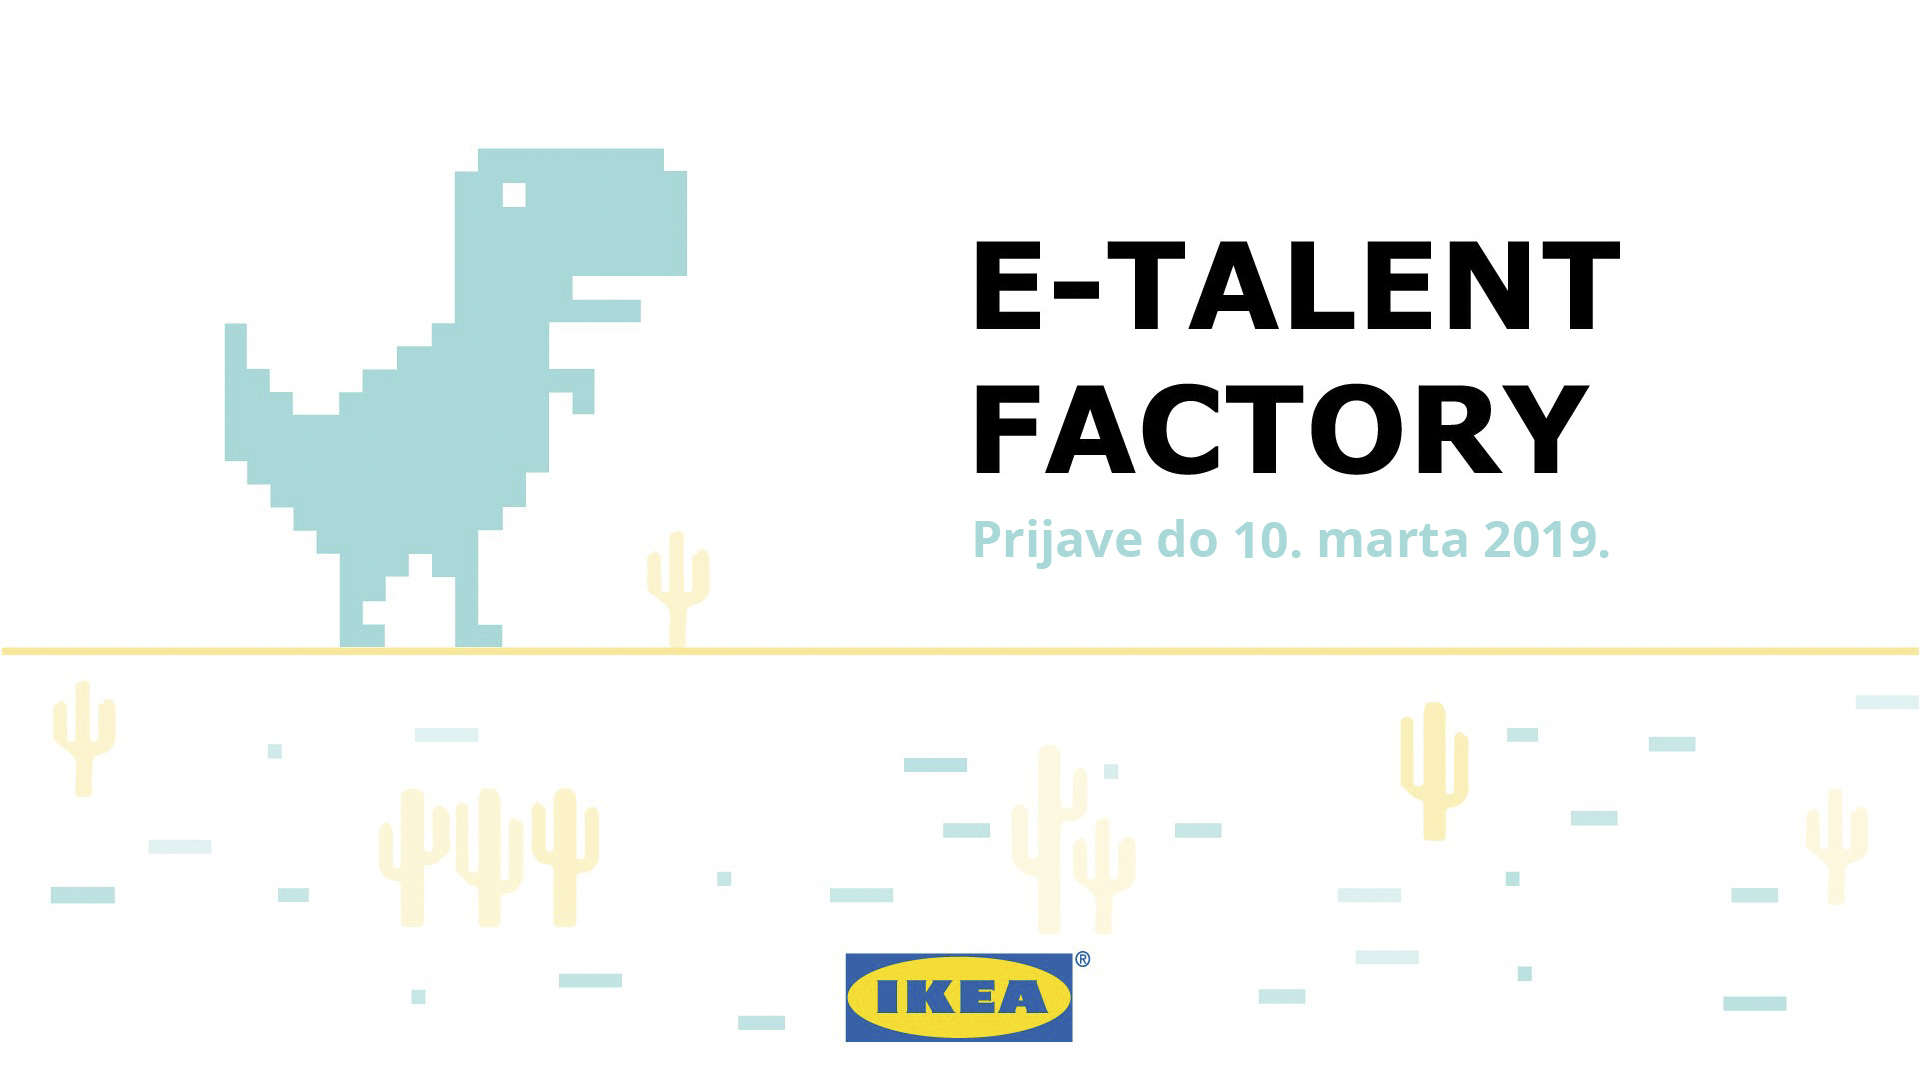 Postanite deo IKEA „e-Talent Factory“ programa